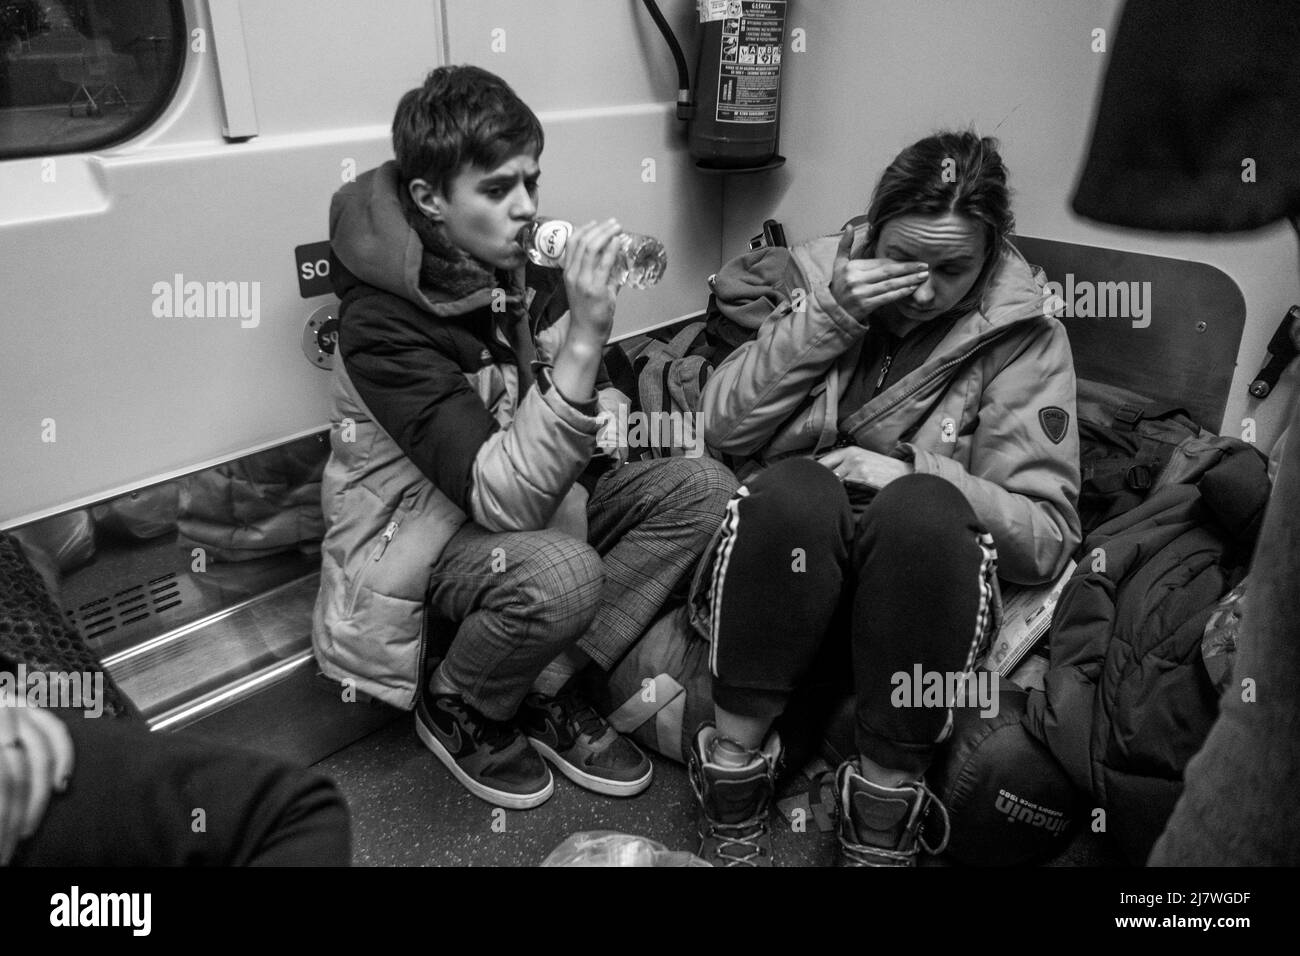 Michael Bunel / Le Pictorium -  Refugees on the Polish-Ukrainian border  -  7/3/2022  -  Poland / Przemysl  -  At the train station in Przemysl, women Stock Photo